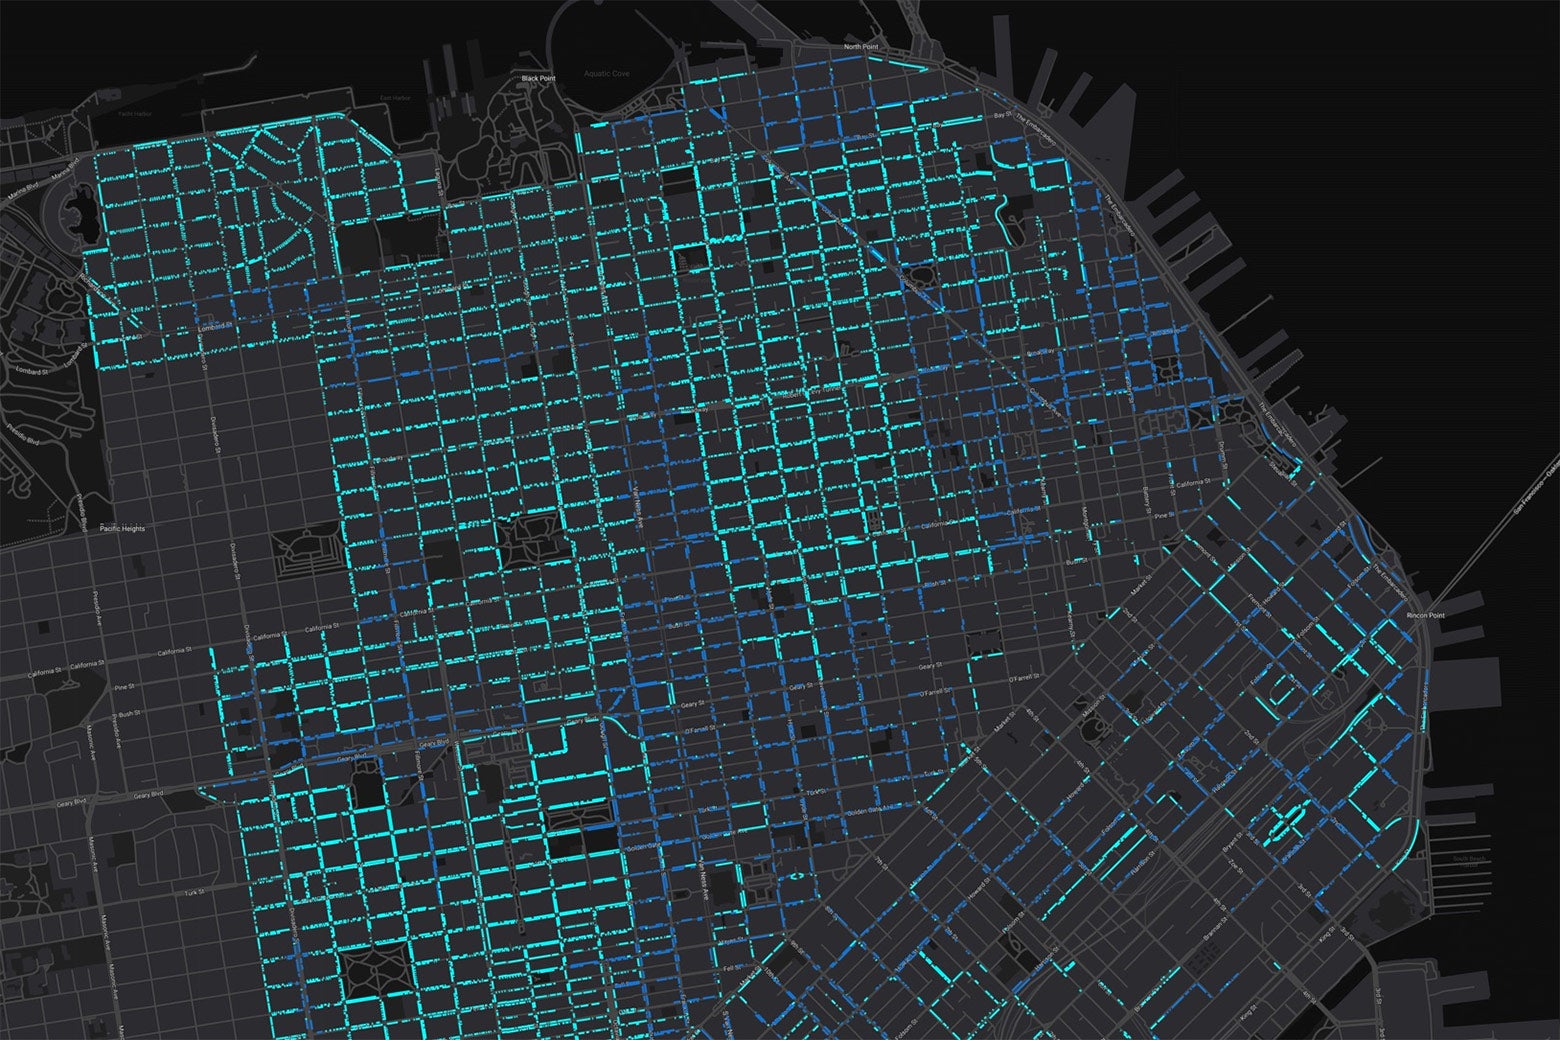 Parking map of San Francisco.